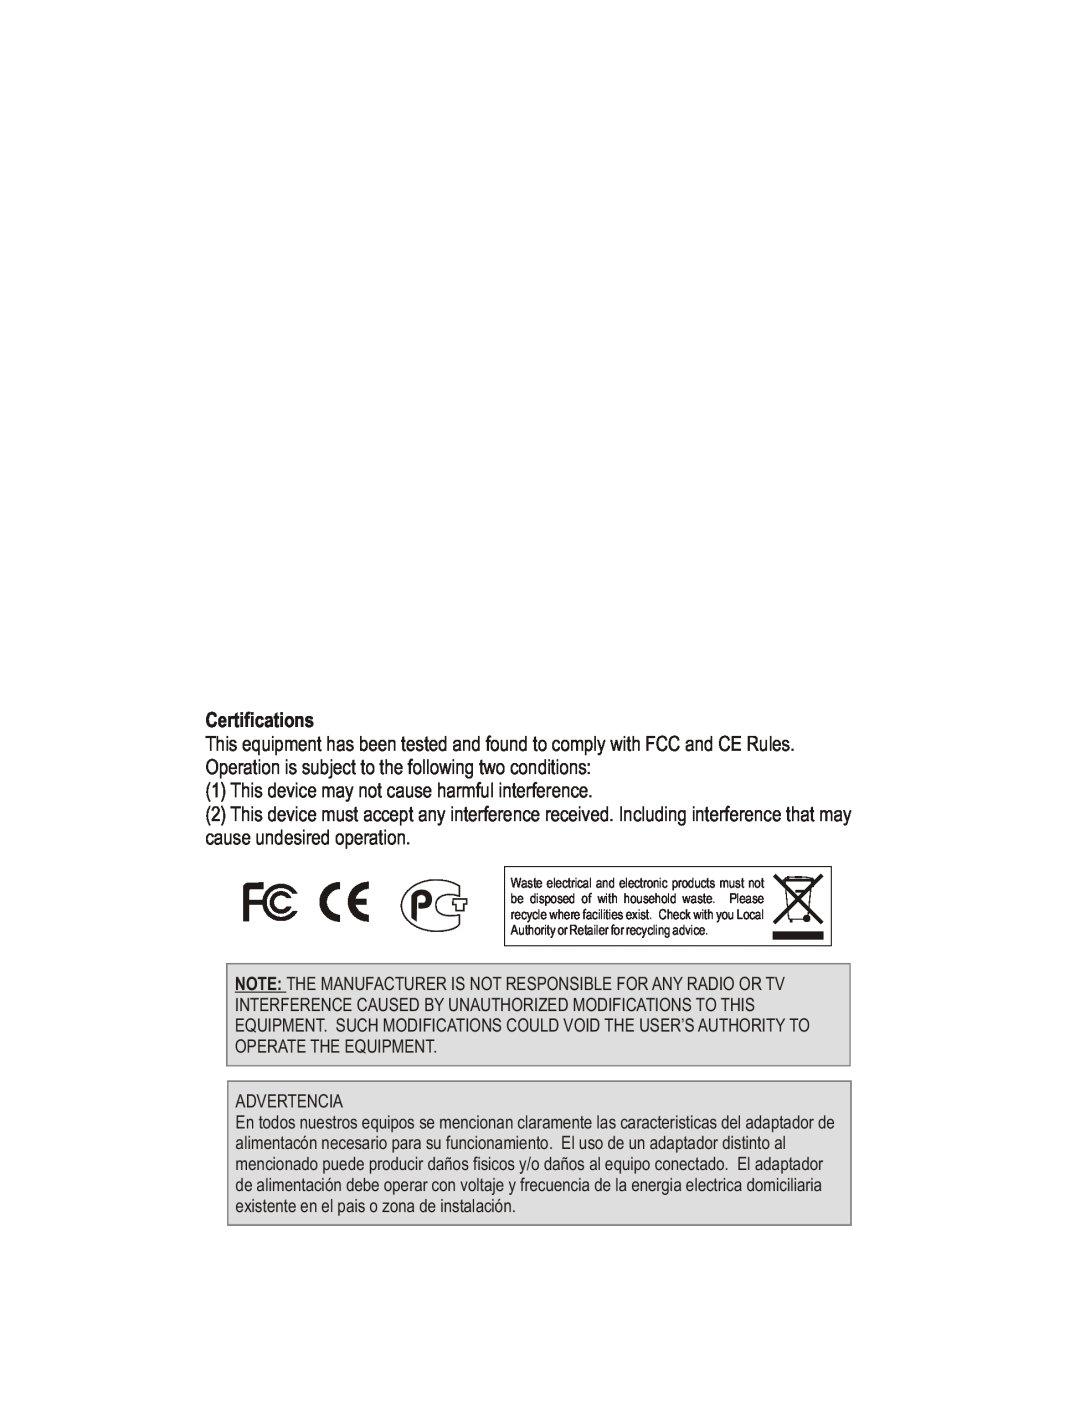 TRENDnet TEG-448WS manual Certifications 